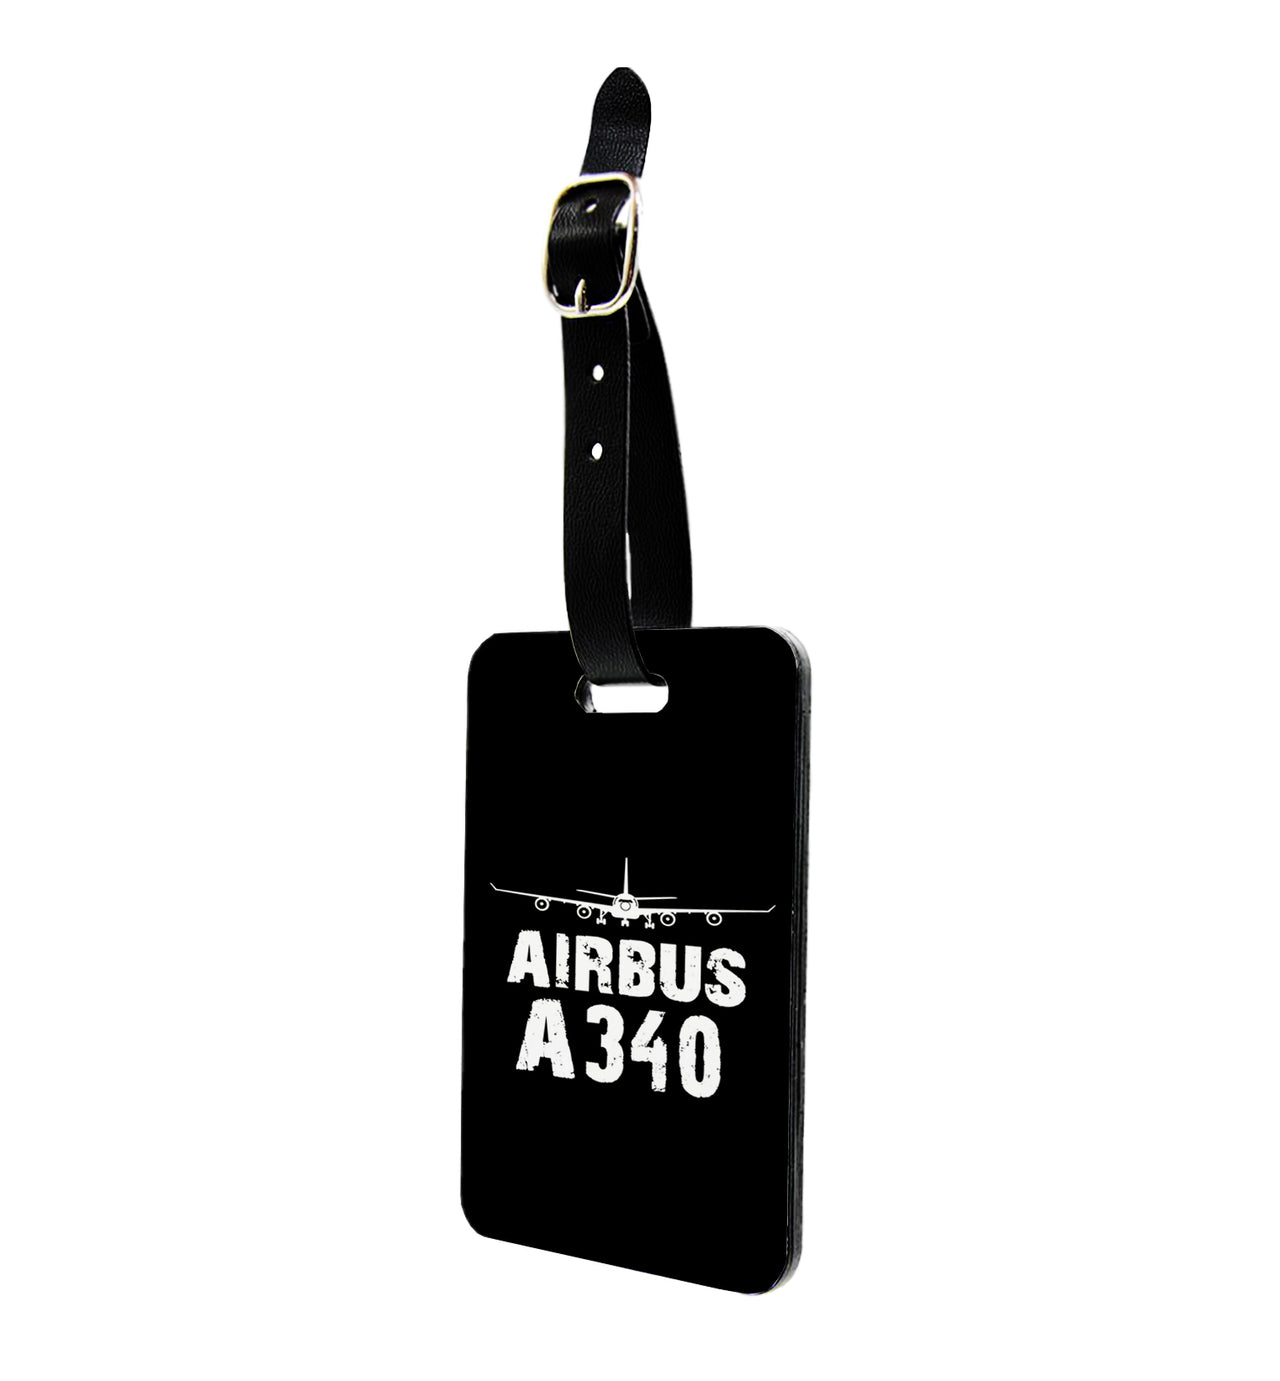 Airbus A340 & Plane Designed Luggage Tag